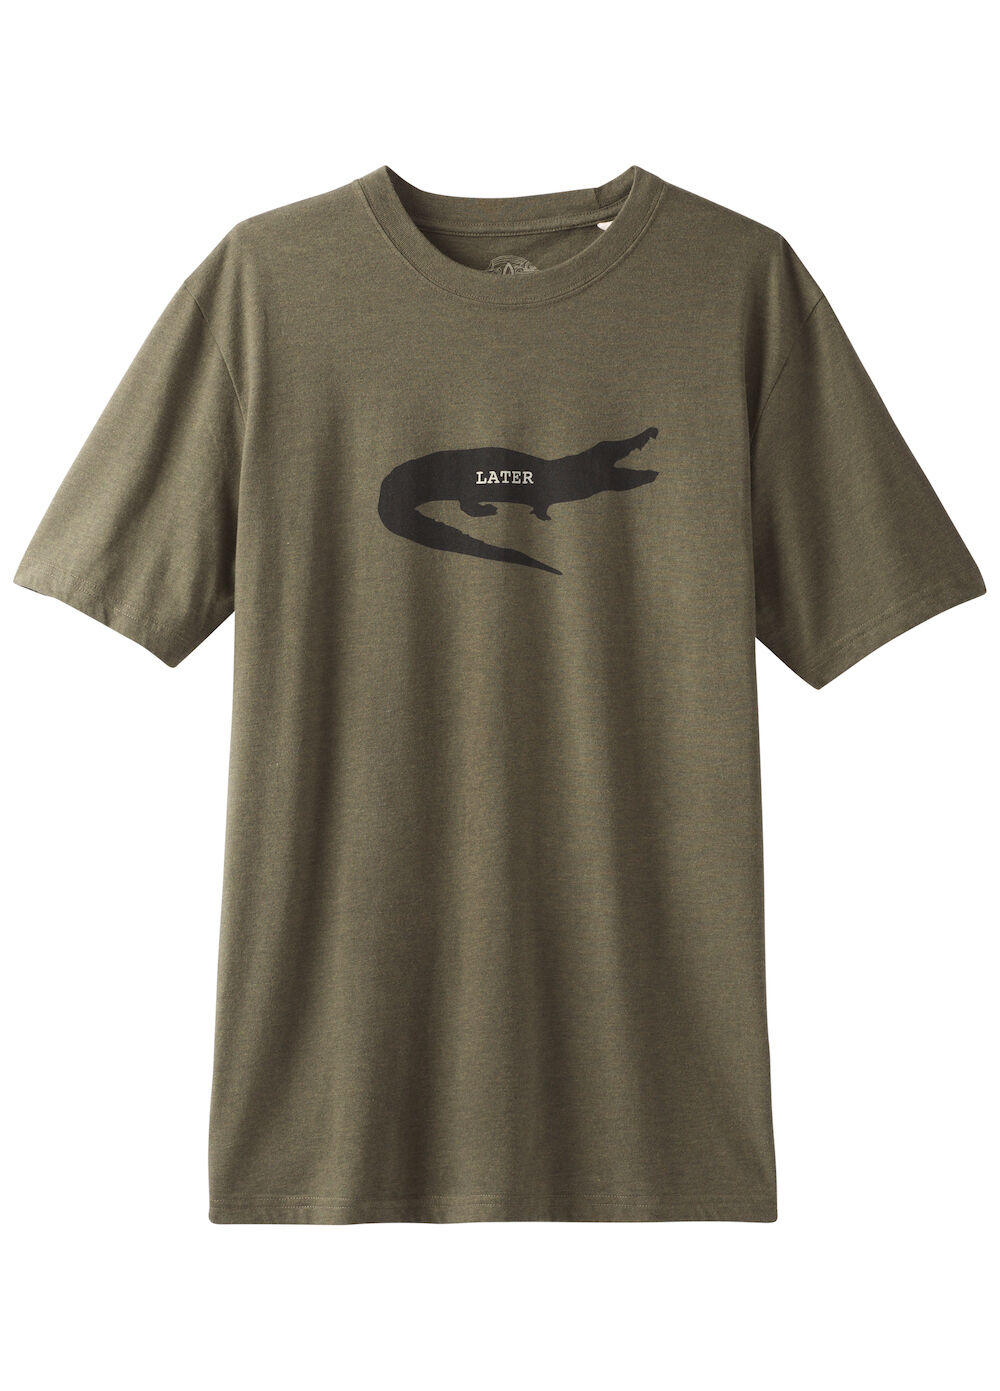 Prana - Later Gator Journeyman - Camiseta - Hombre